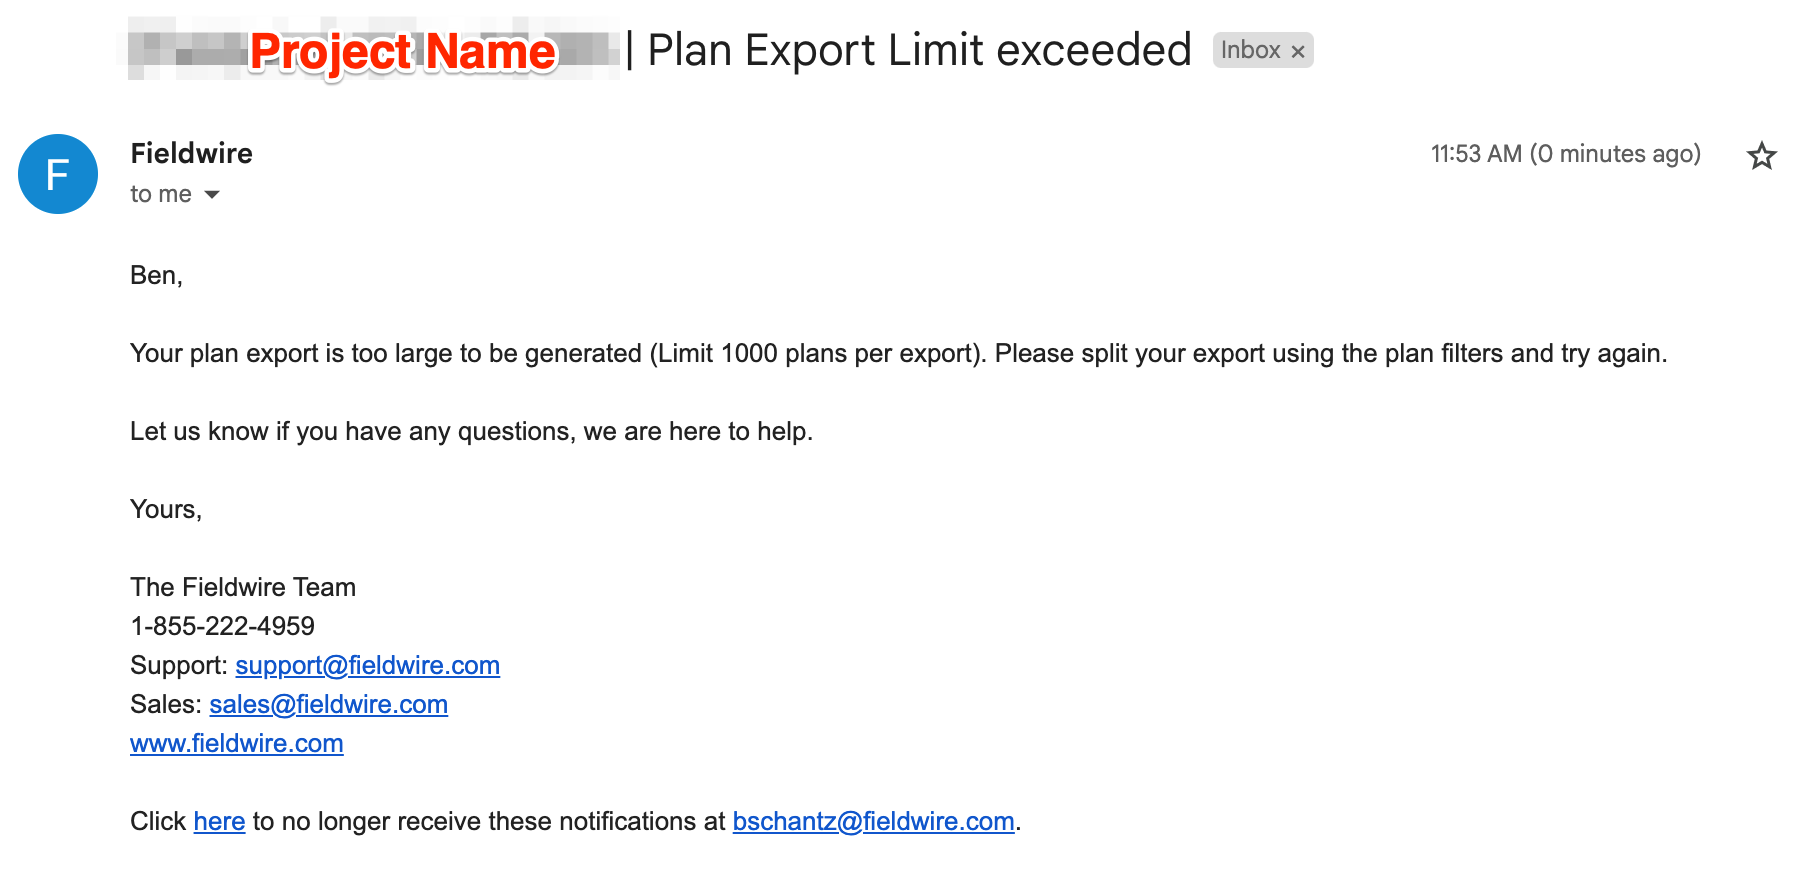 _Fieldwire__1374_-_NE_8th___Plan_Export_Limit_exceeded_-_bschantz_fieldwire_com_-_Fieldwire_Mail.png